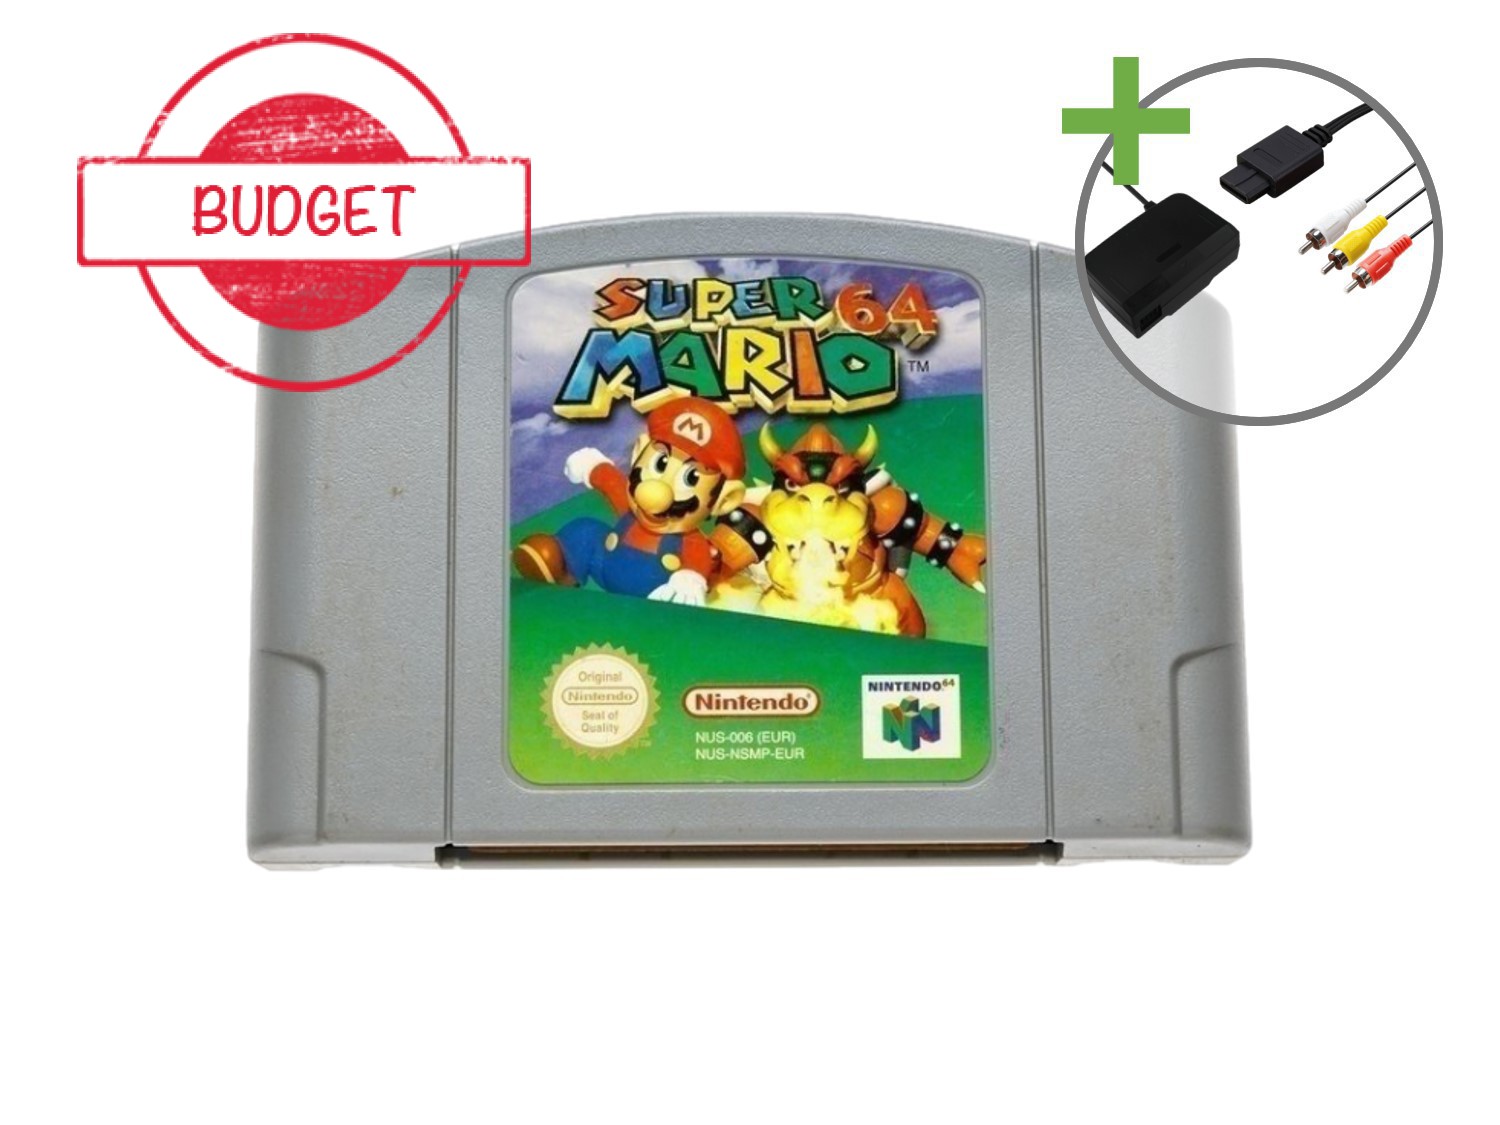 Nintendo 64 Starter Pack - Super Mario 64 Edition - Budget - Nintendo 64 Hardware - 4